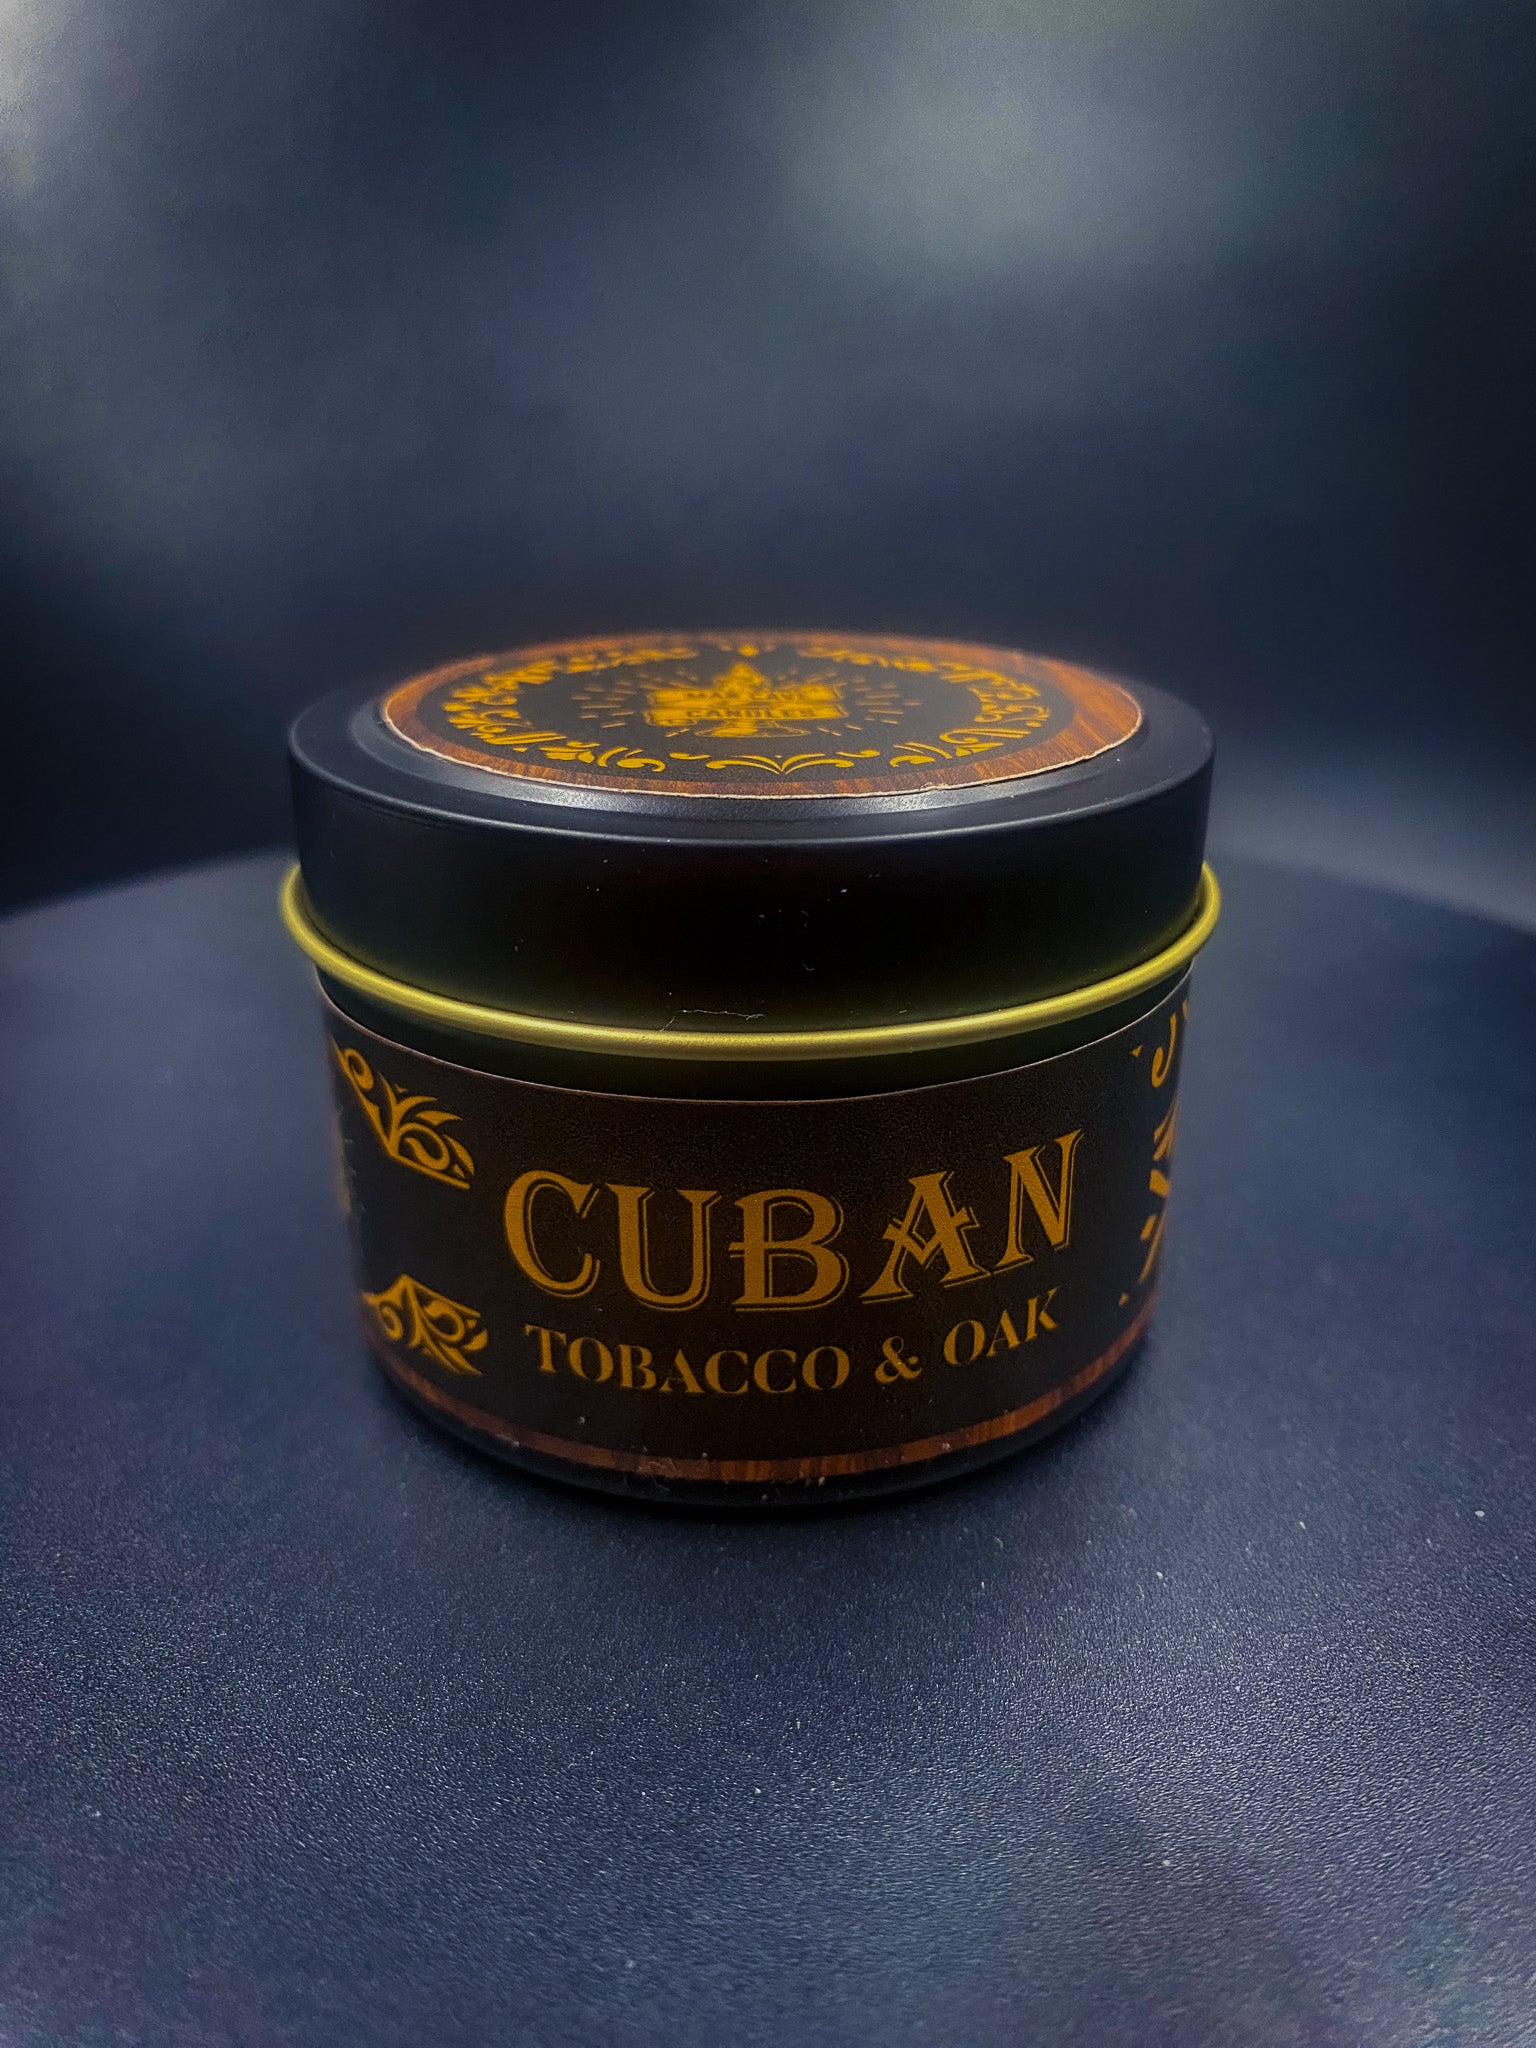 Cuban - Tobacco & Oak Scented Man Cave Candle